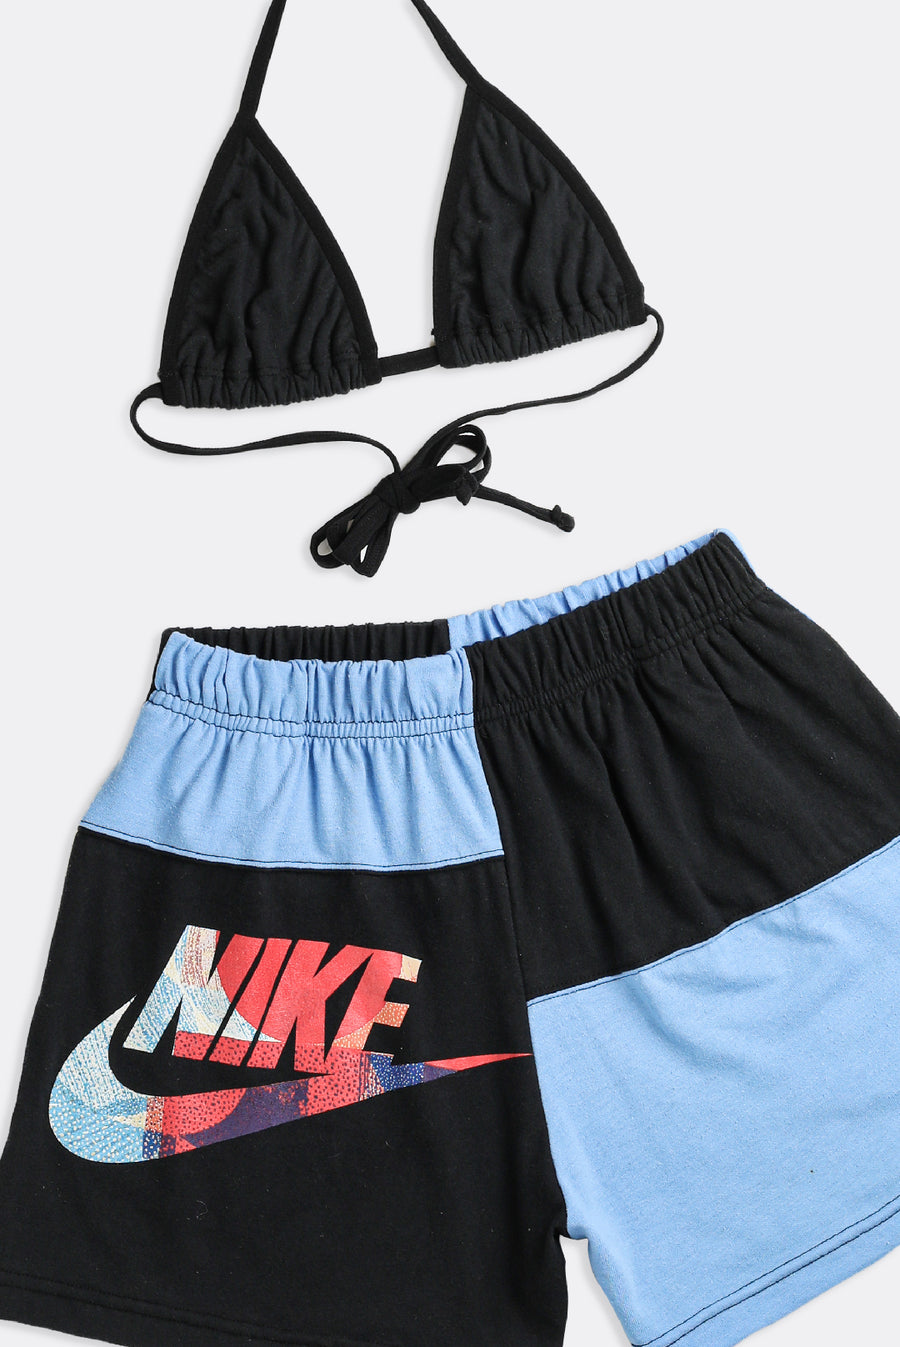 Rework Nike Patchwork Tee Shorts Set - XS, S